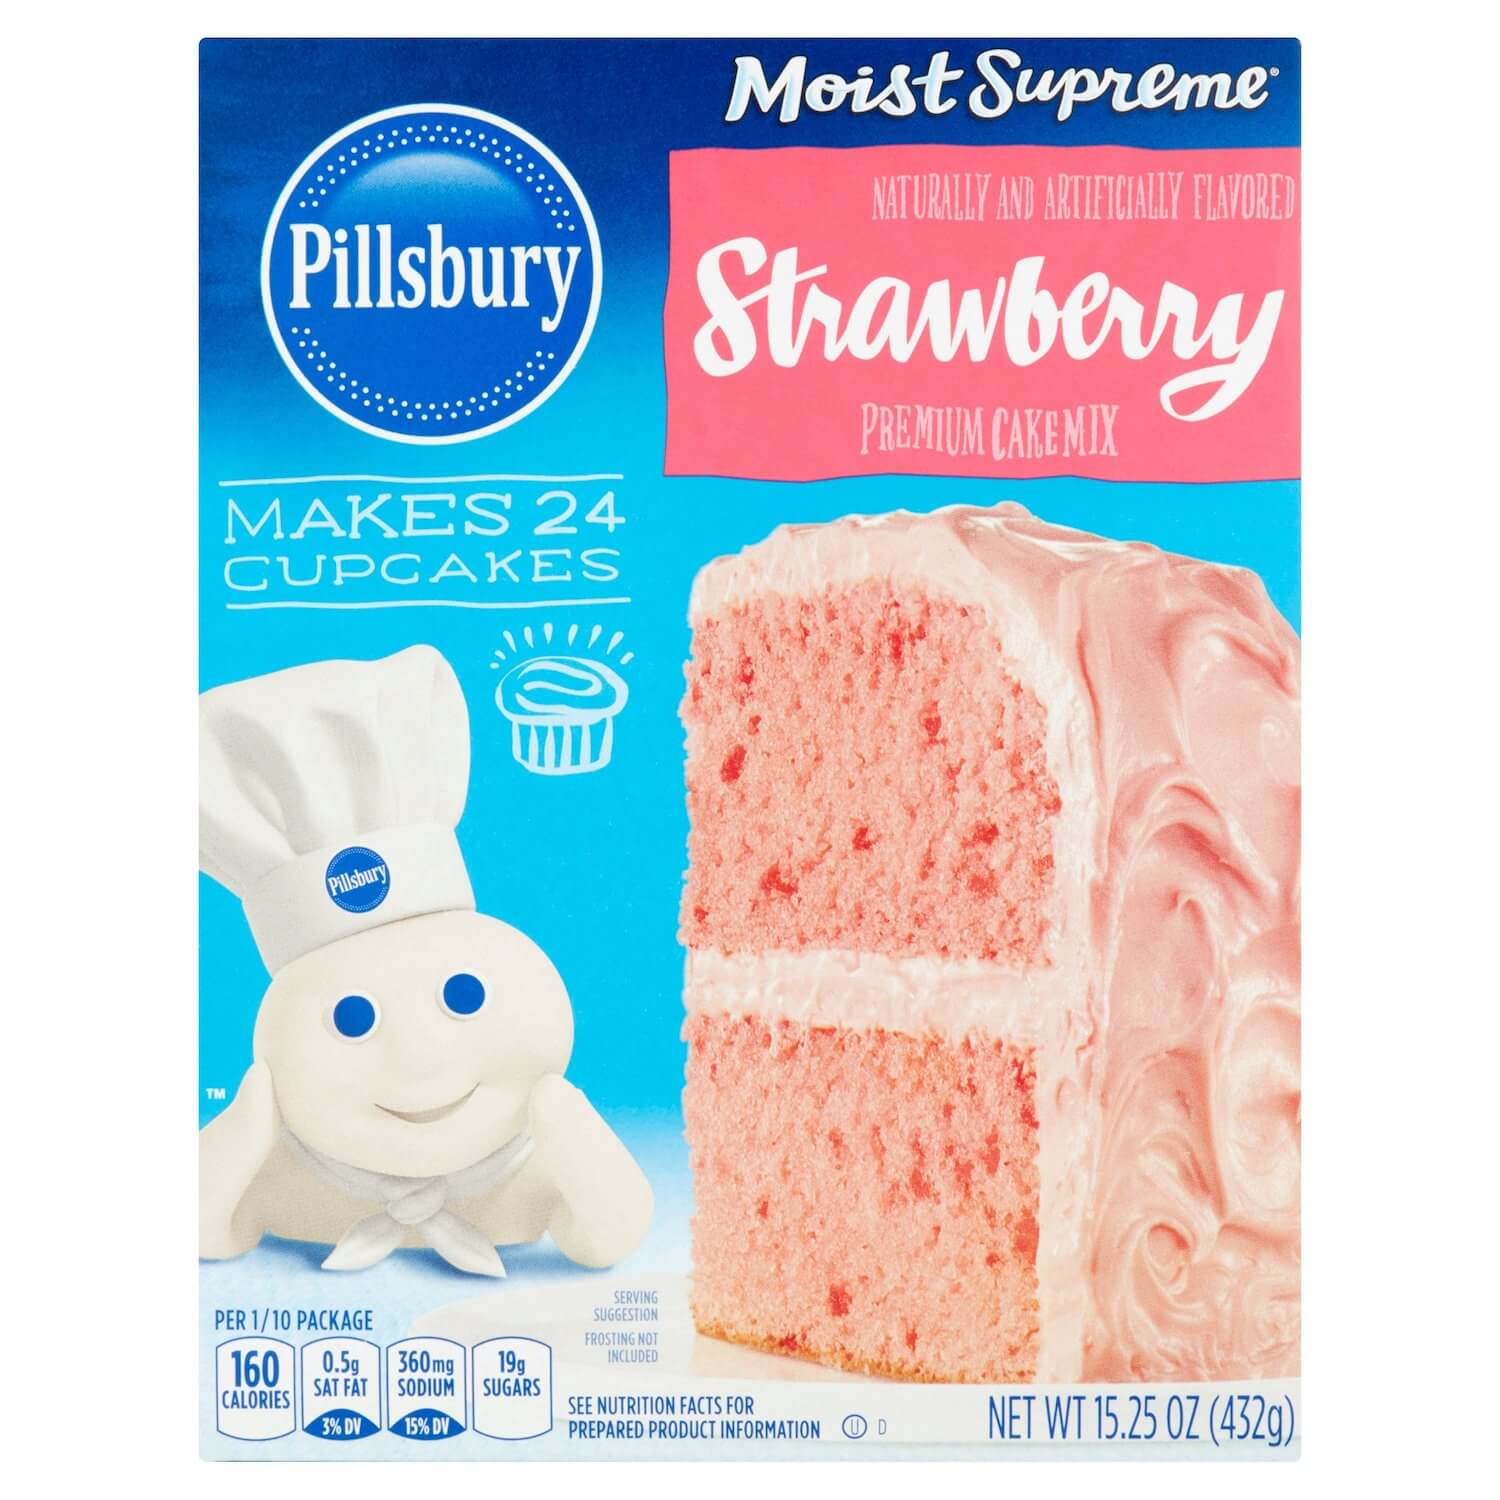 Pillsbury Moist Supreme Premium Cake Mix Strawberry 432g